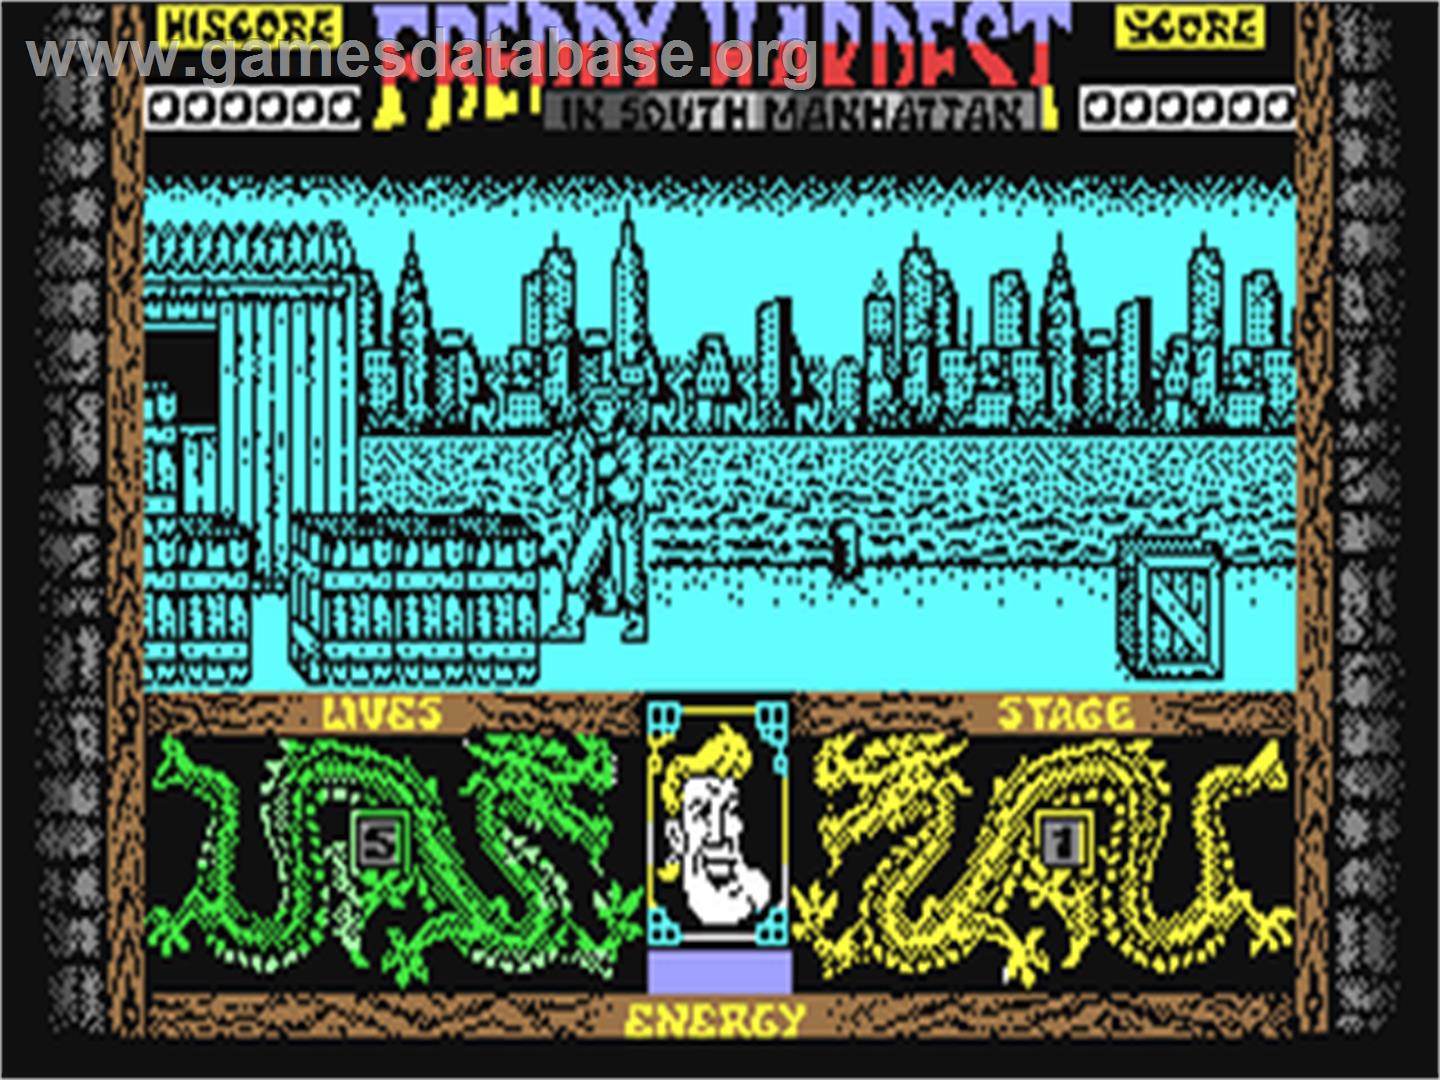 Freddy Hardest in South Manhattan - Commodore 64 - Artwork - In Game